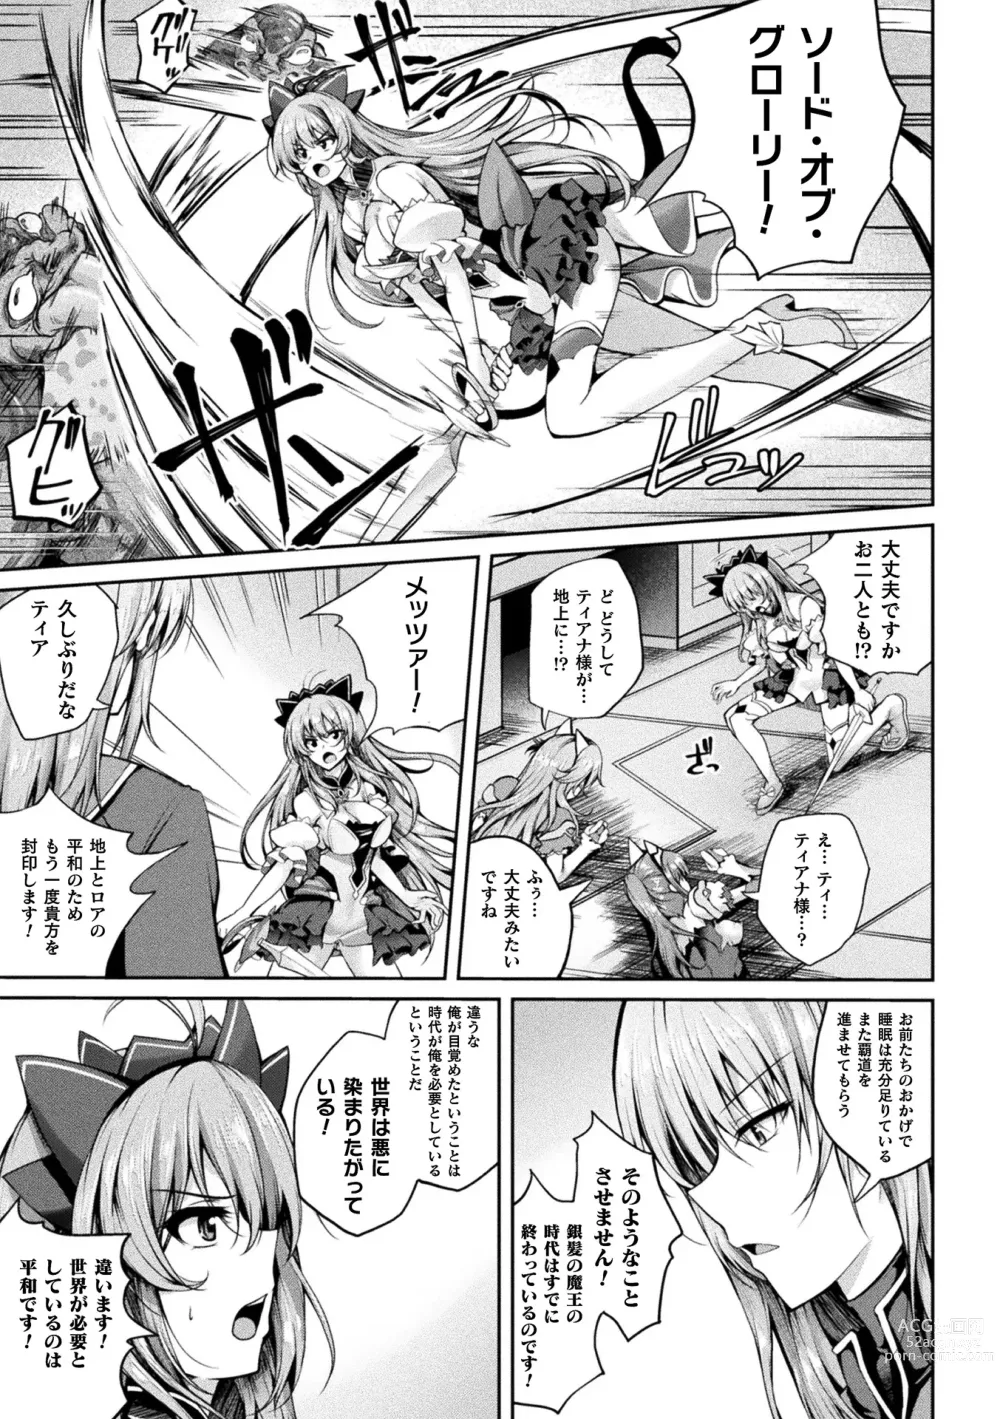 Page 23 of manga Kukkoro Heroines Vol. 33